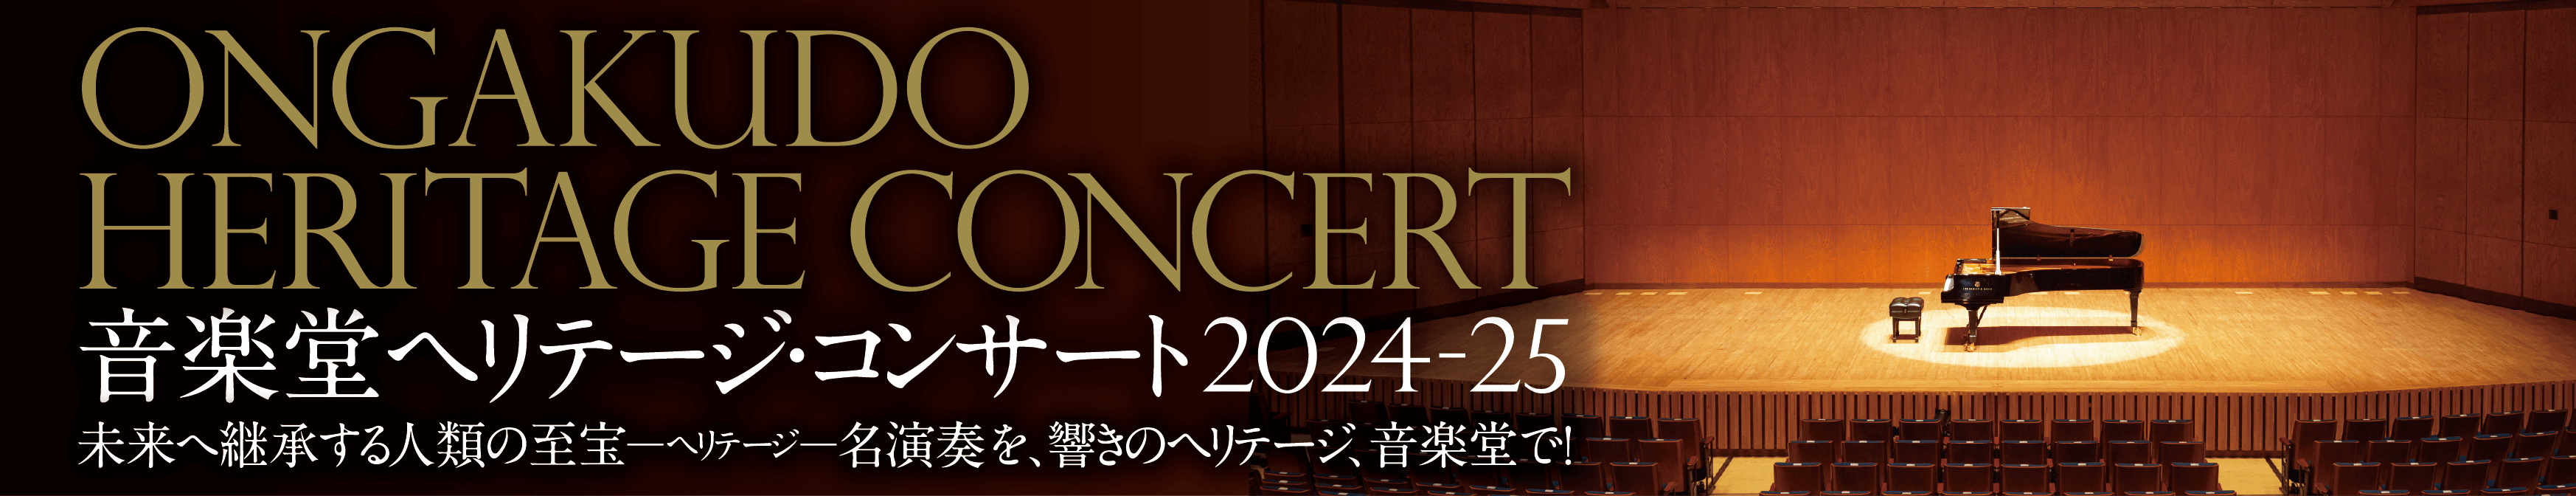 Ongakudo Heritage Concert 音楽堂ヘリテージ・コンサート2024-25